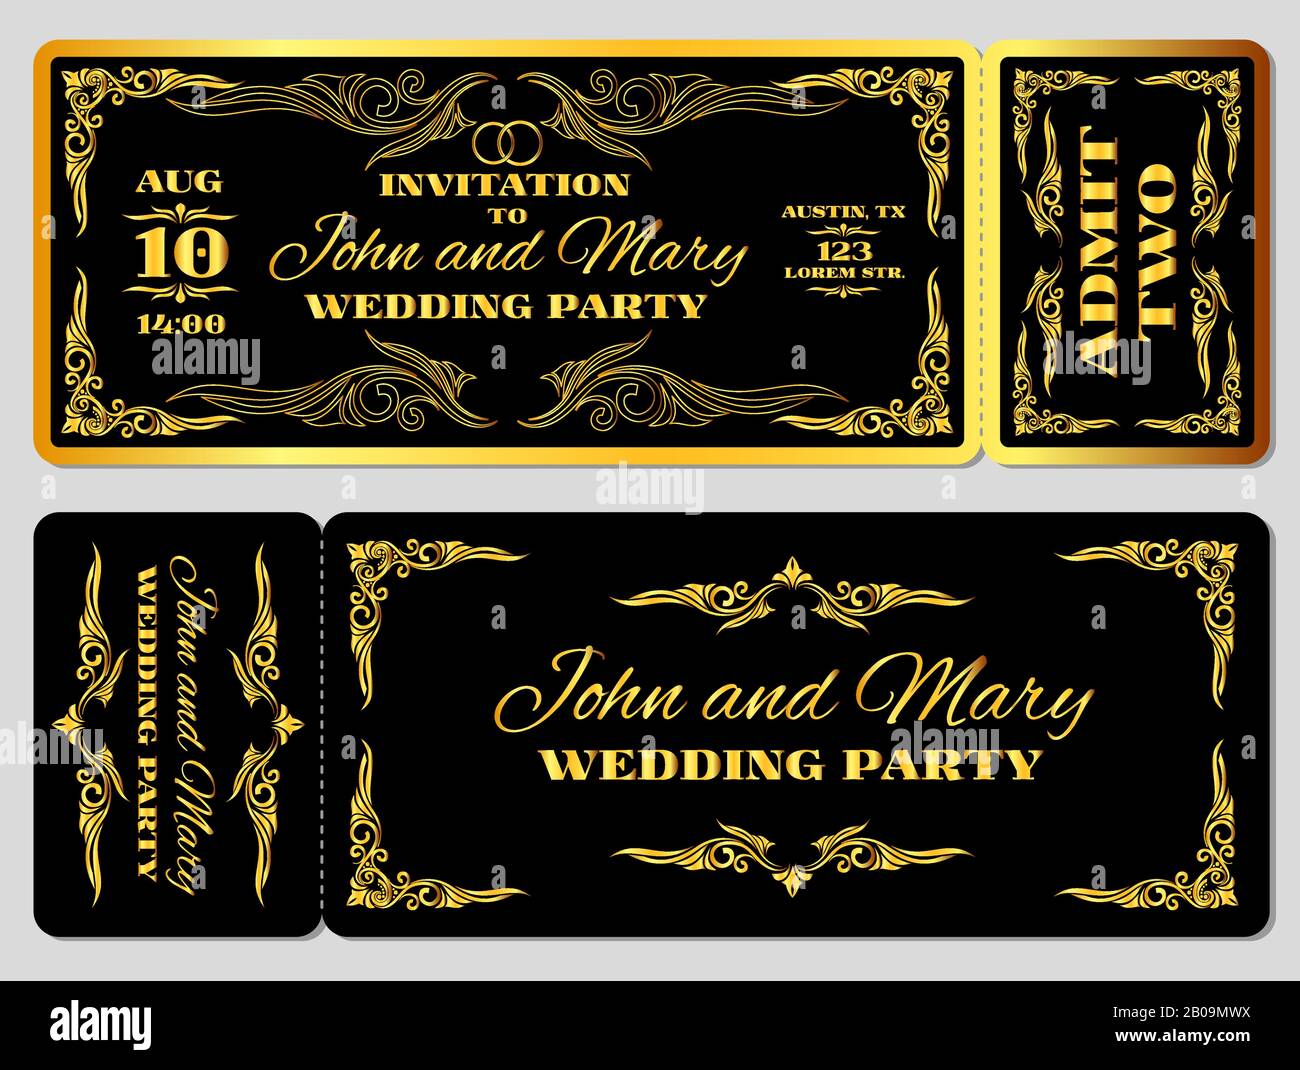 Wedding party invitation template in golden black. Banner with golden elegant frame illustration Stock Vector